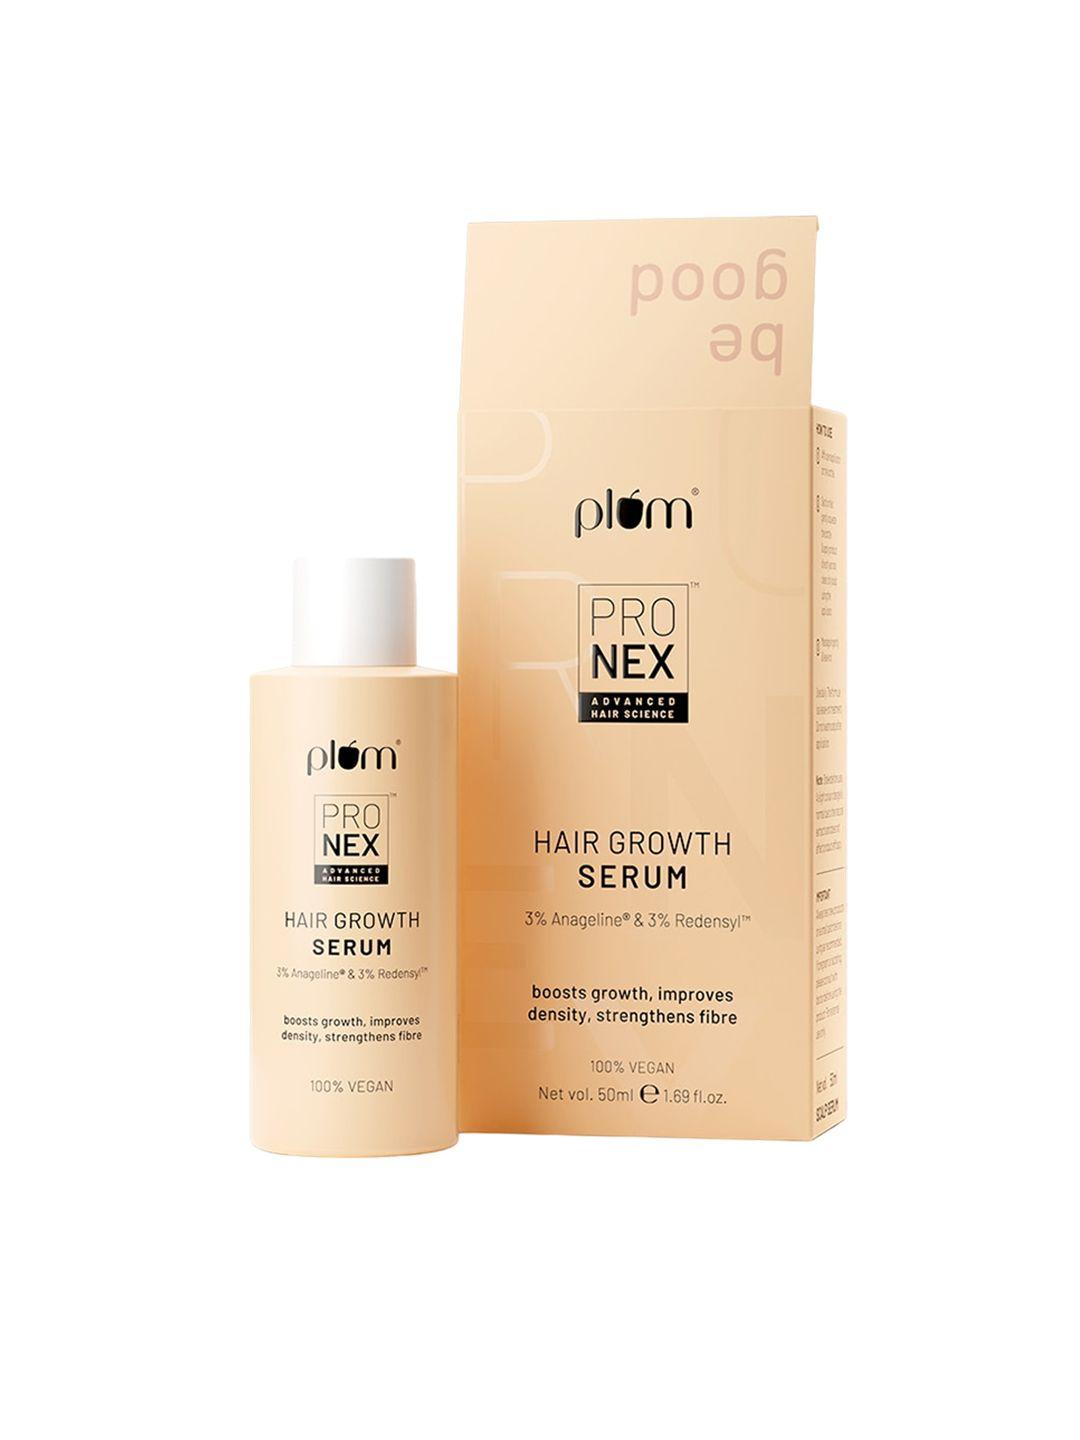 Plum Pro Nex TM Hair Growth Serum For Boosts Hair Growth Improves Hair Density & Strengthens Hair Fiber - 50 ml